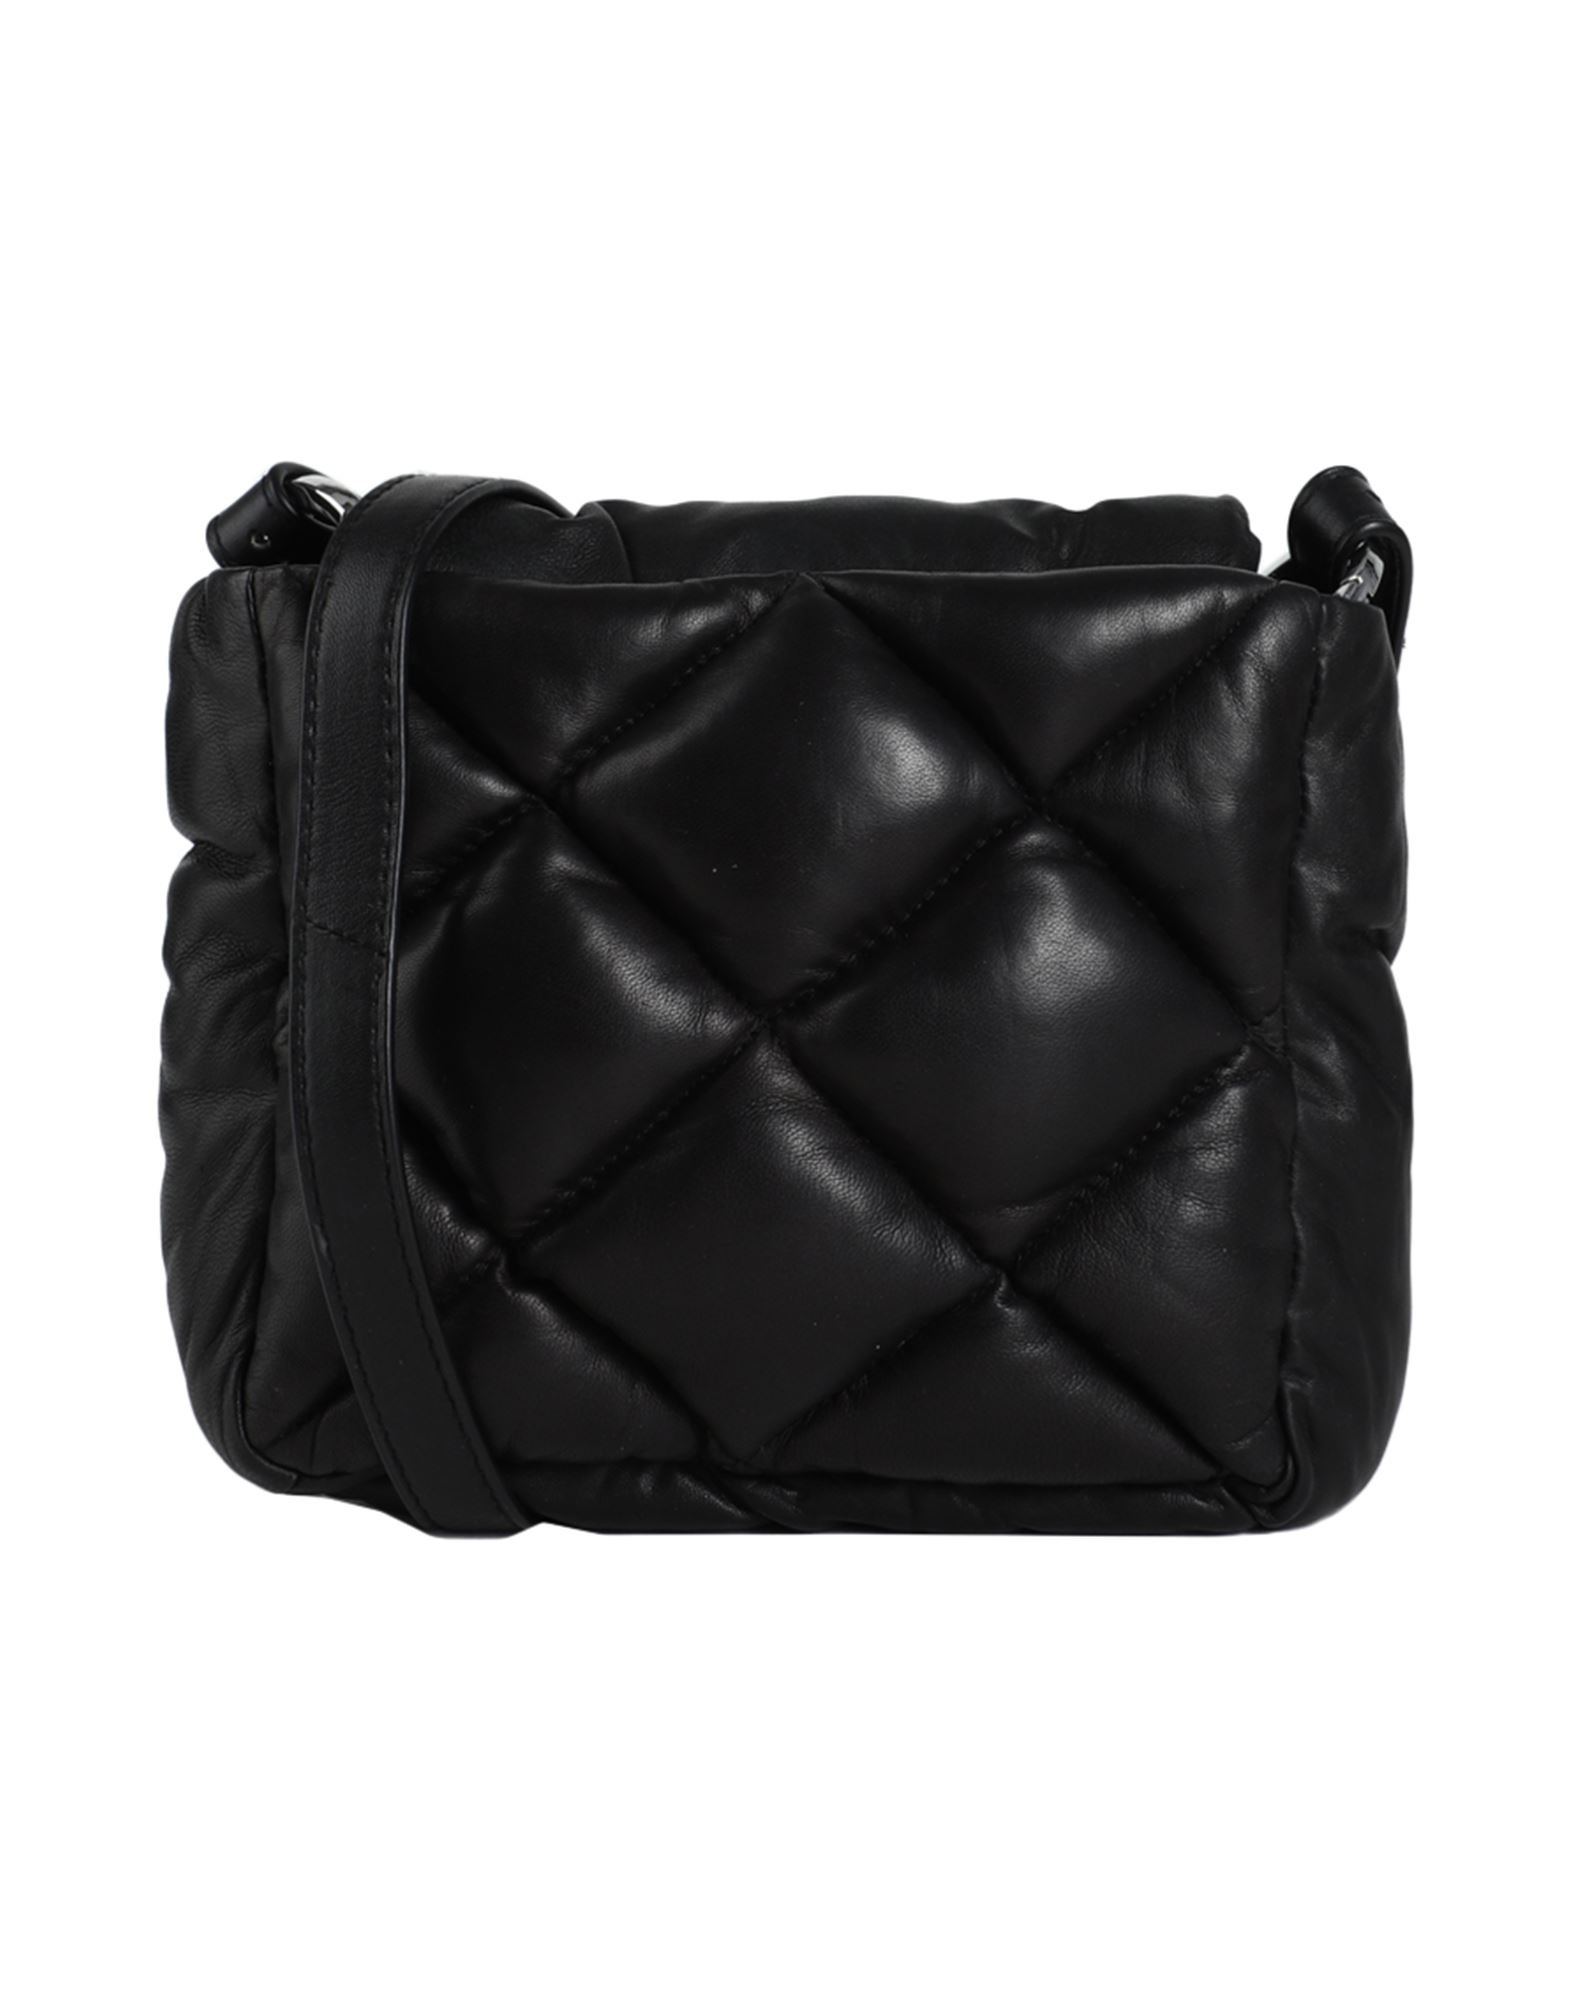 Max & Co Handbags In Black